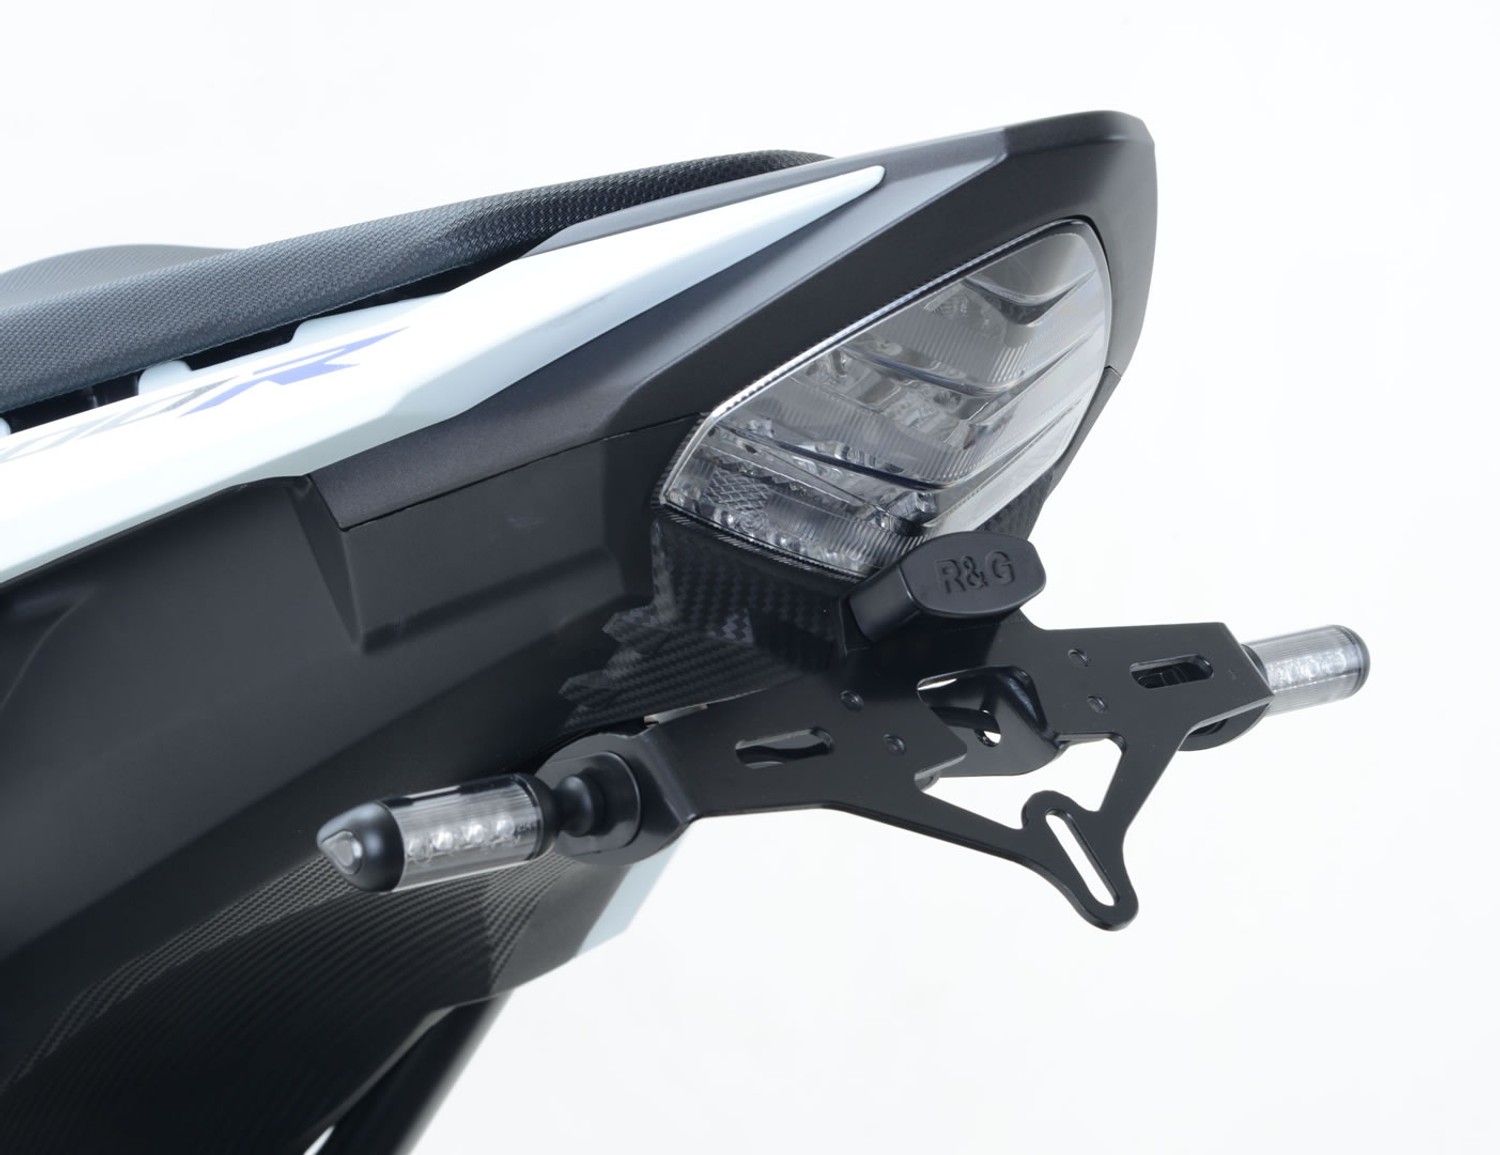 Honda CBR500R 2013-2015 black R&G racing tail tidy licence plate holder